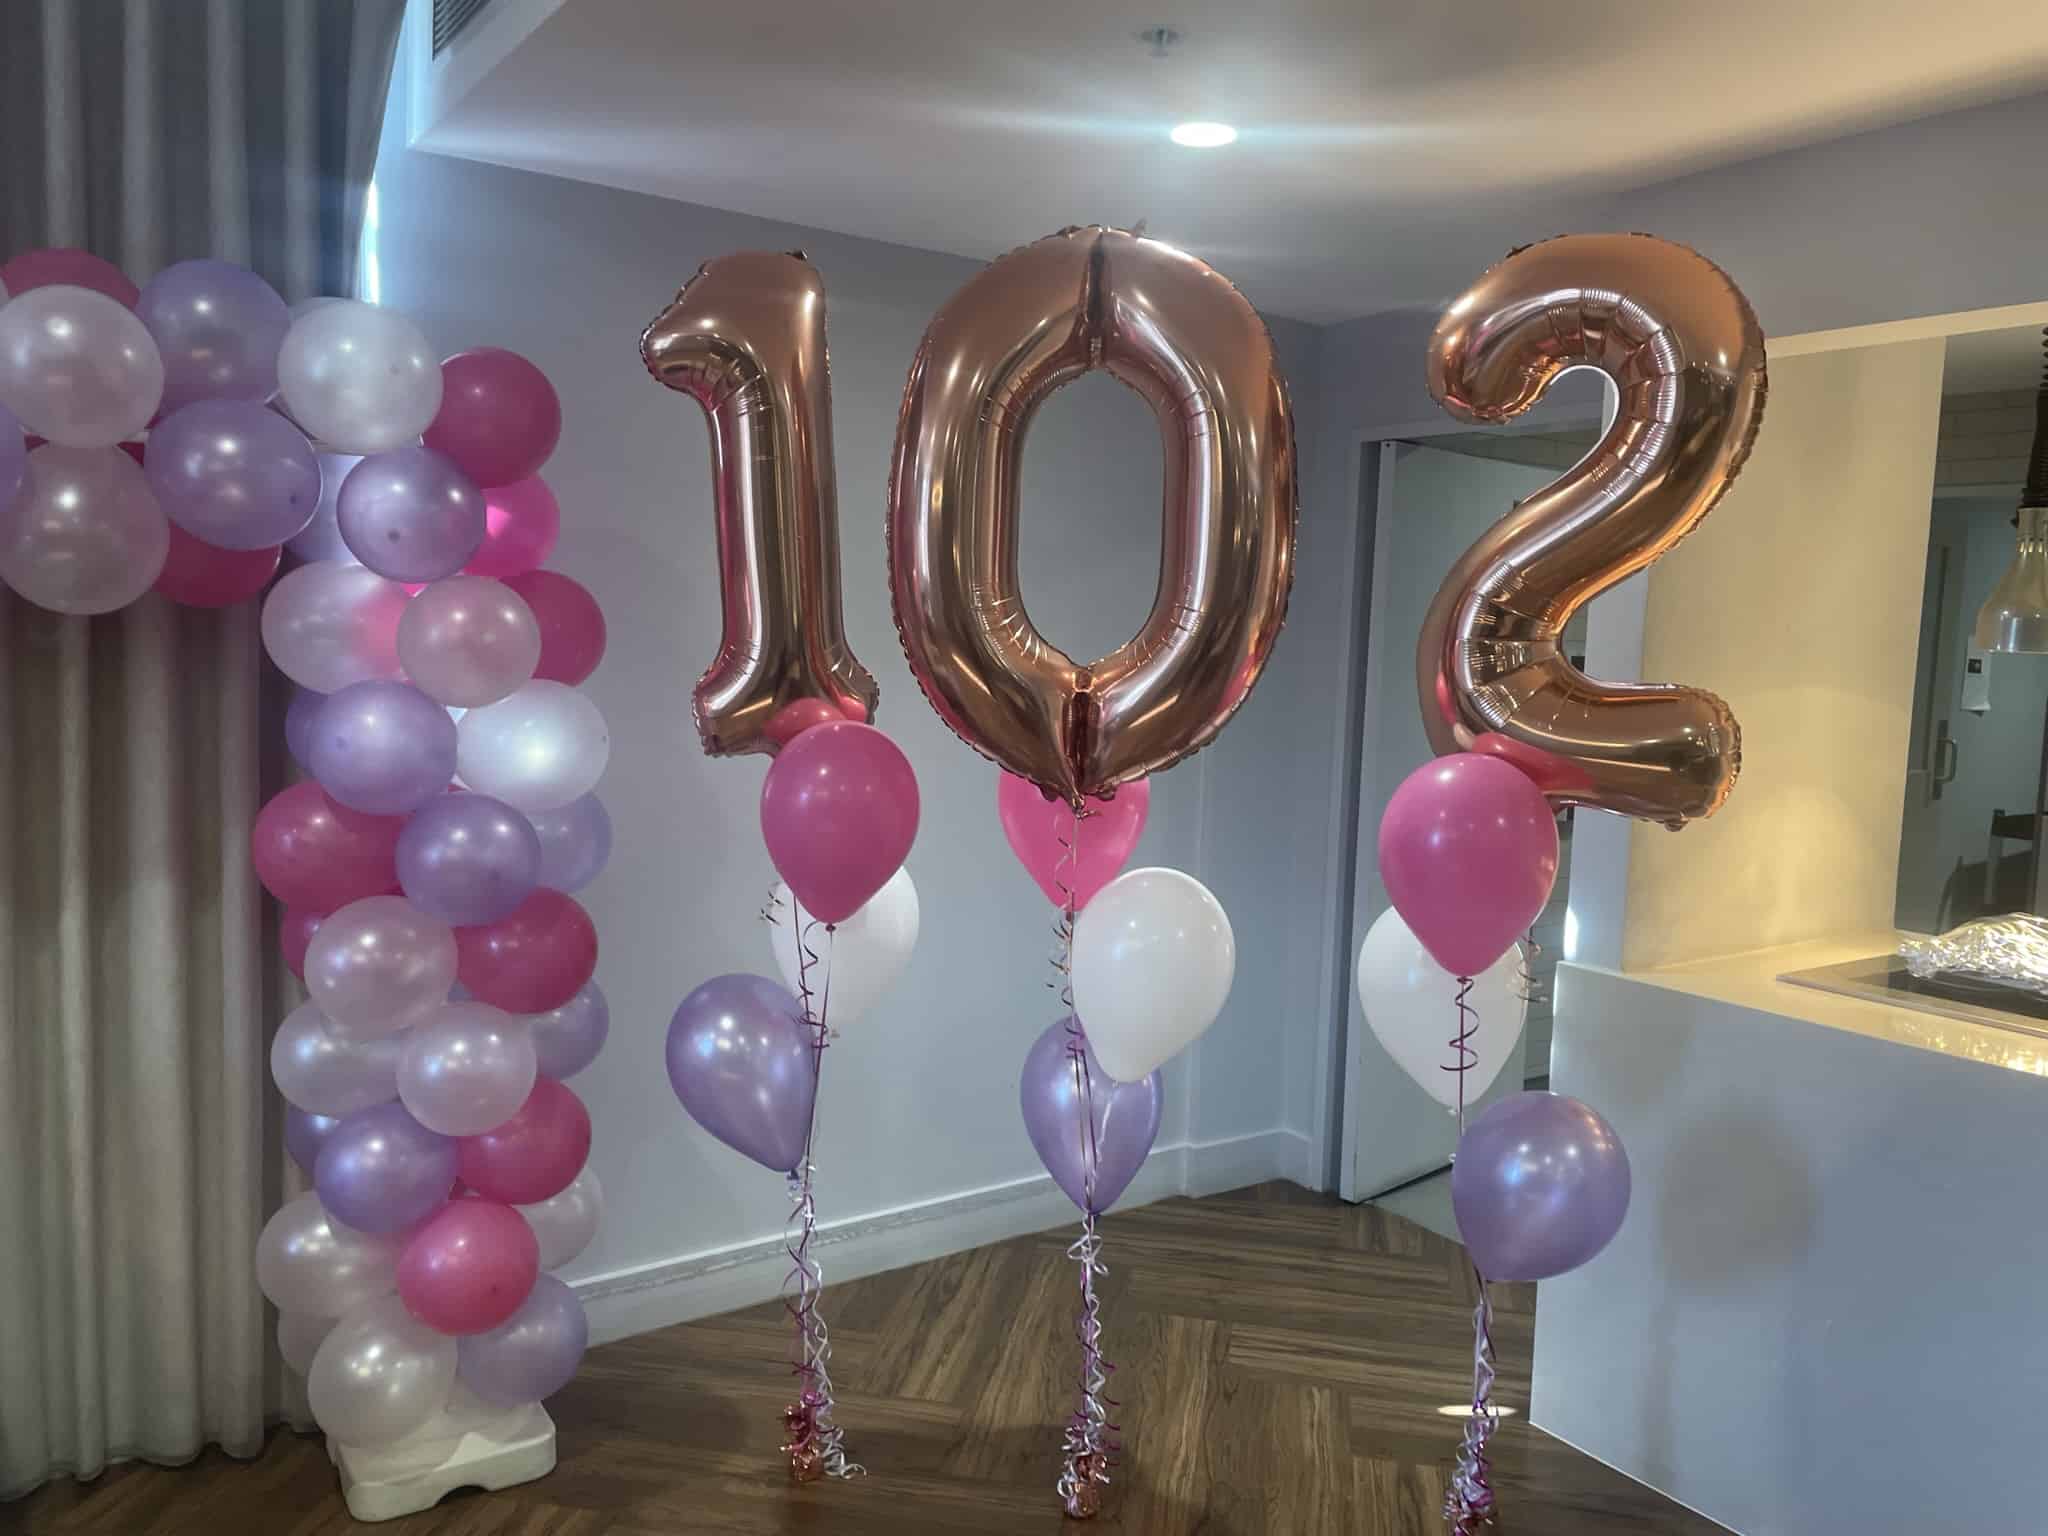 Irene Beck – Celebrating 102nd